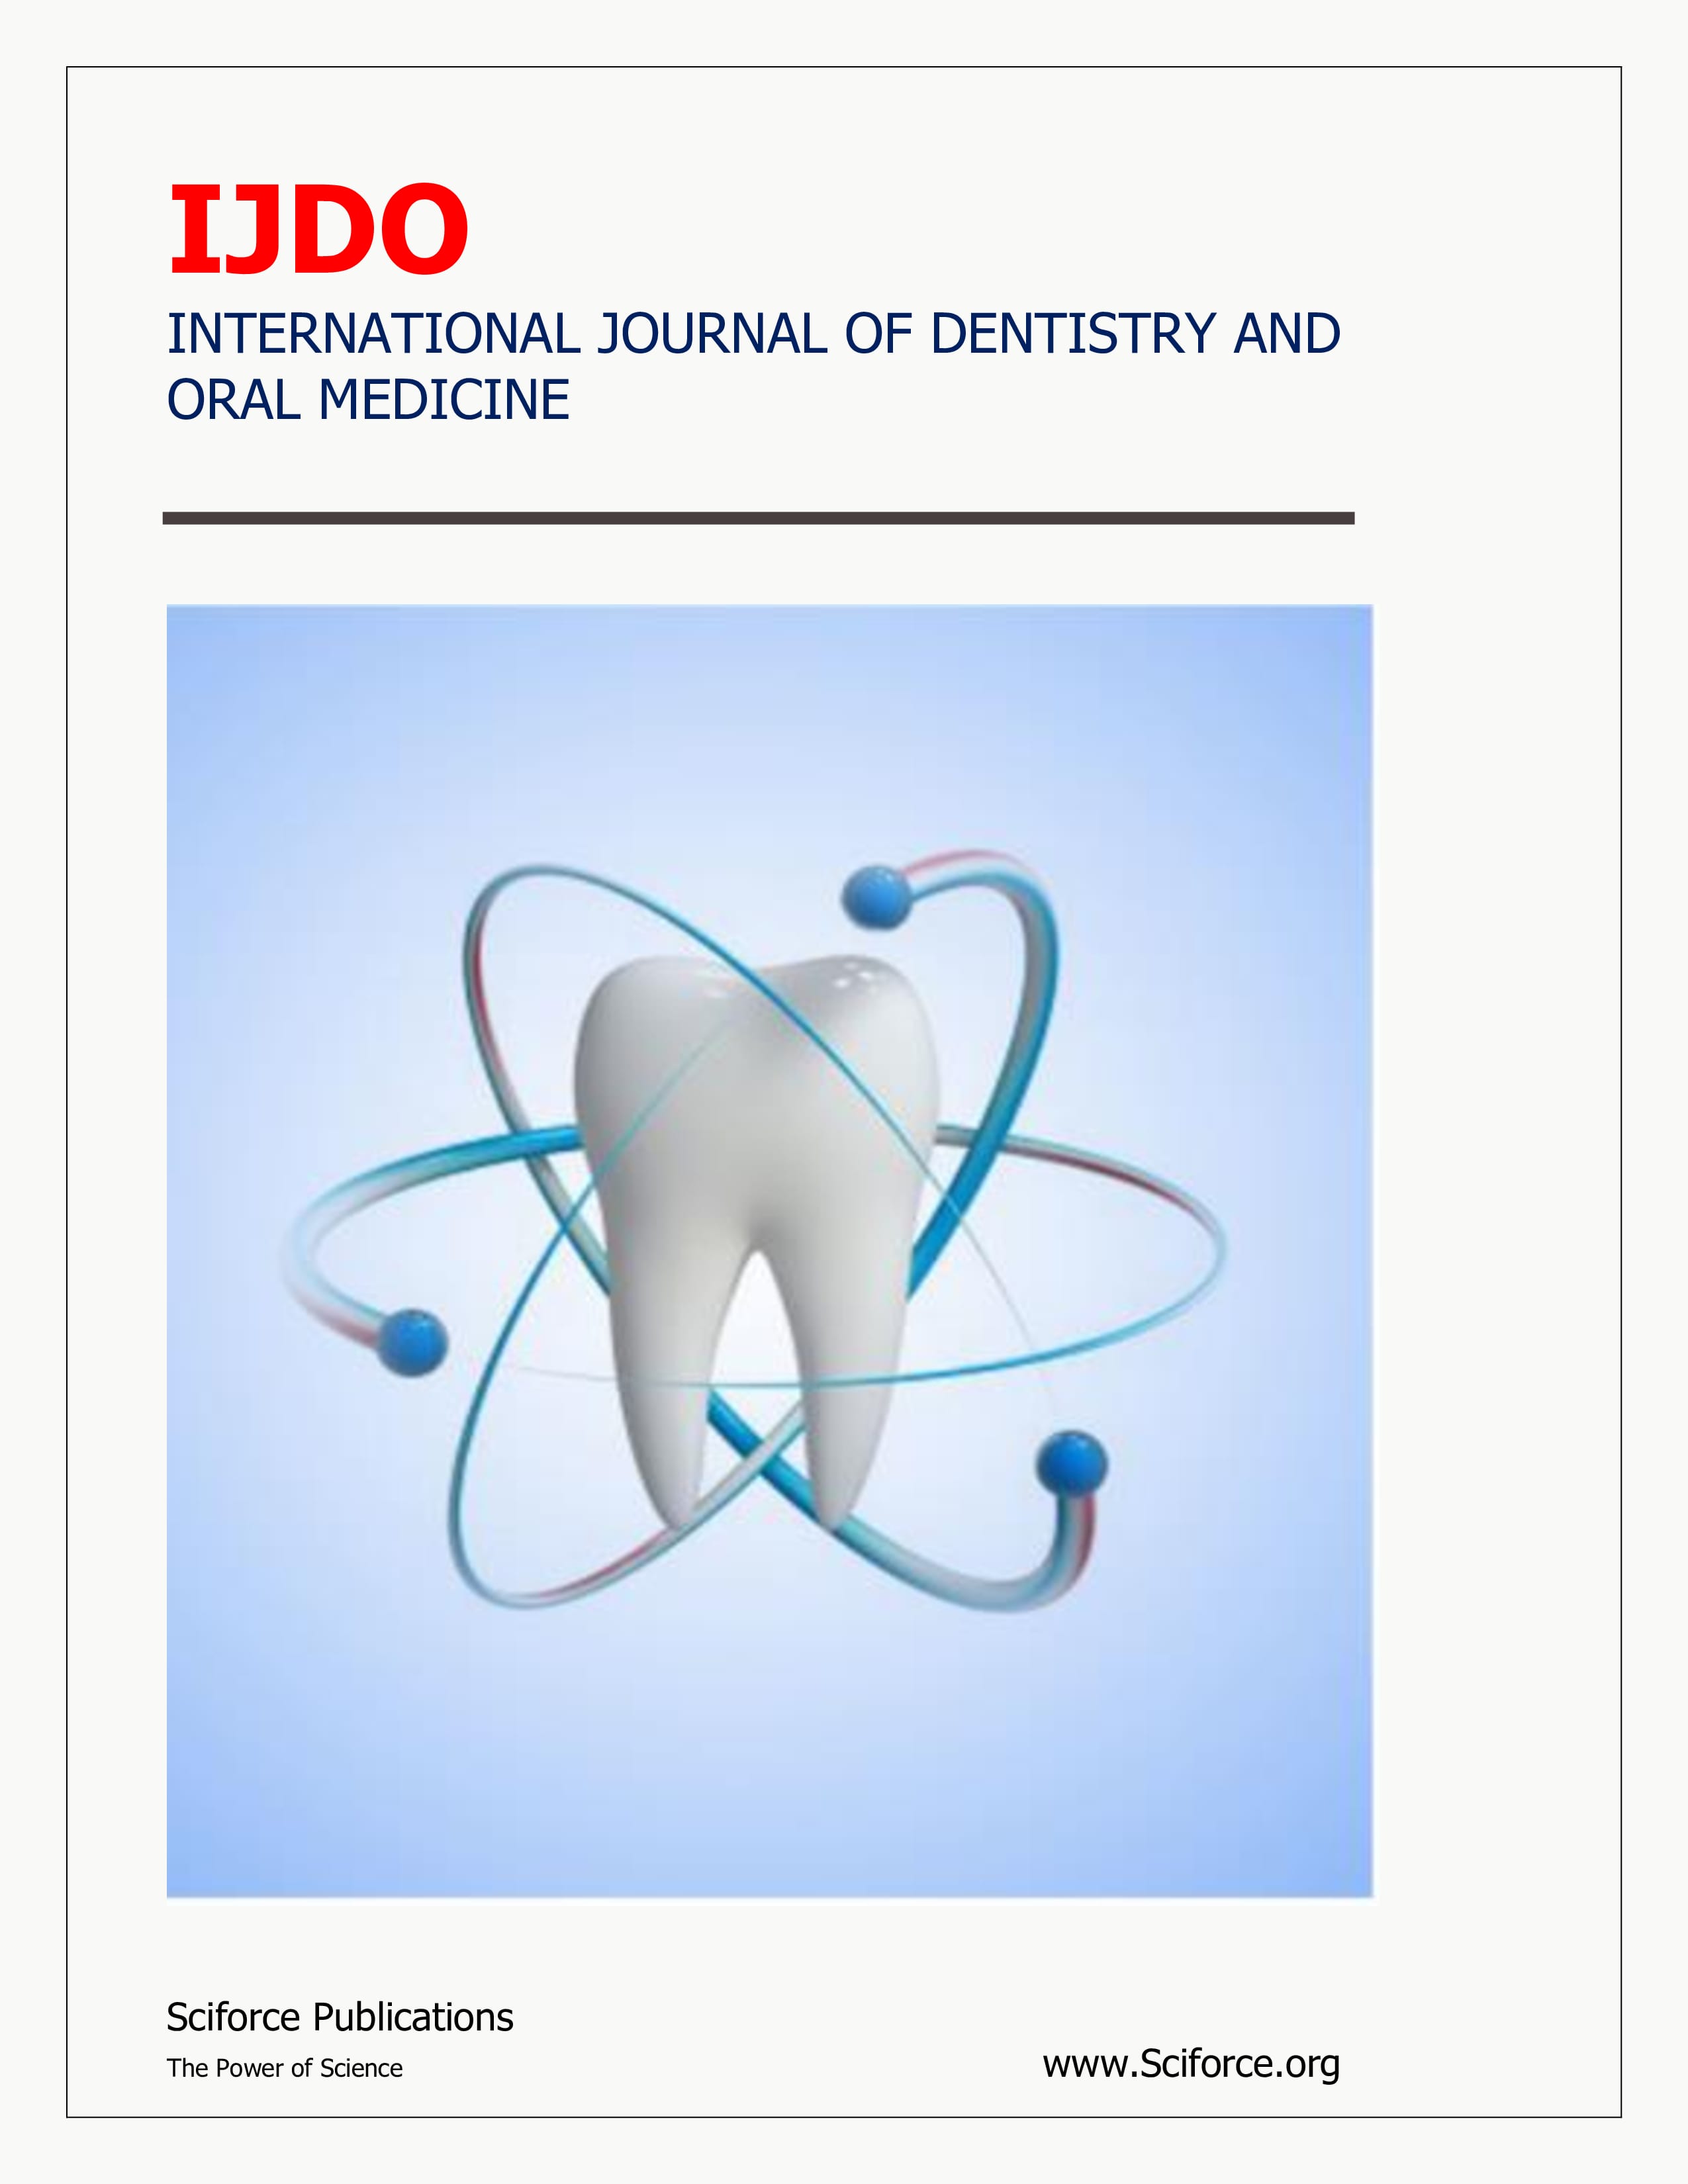 International Journal Of Dentistry & Oral Medicine